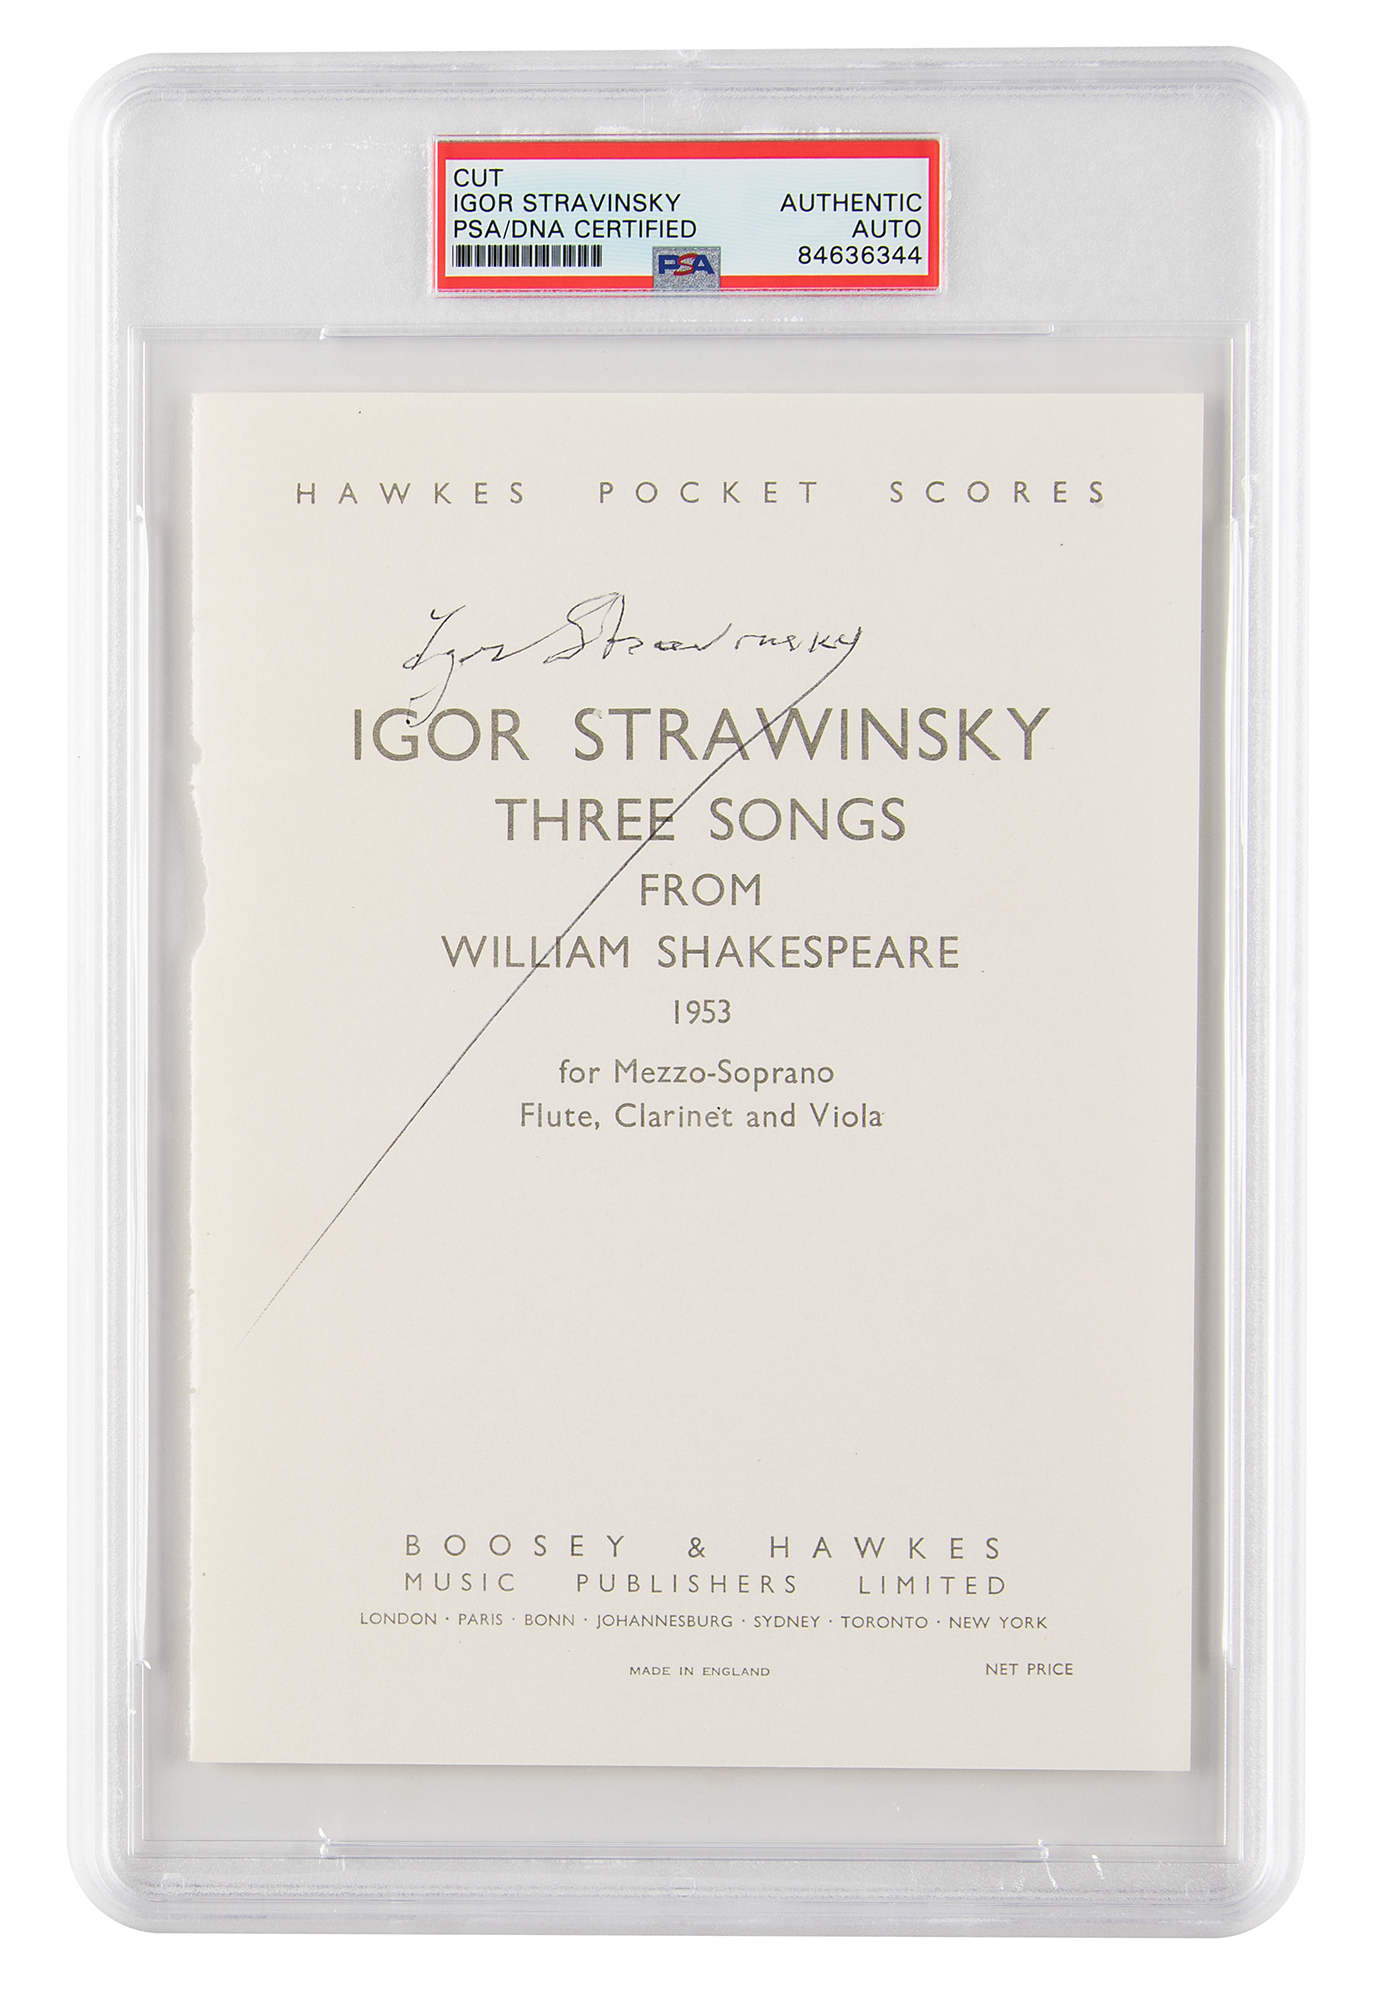 Lot #6498 Igor Stravinsky Signed Title Page